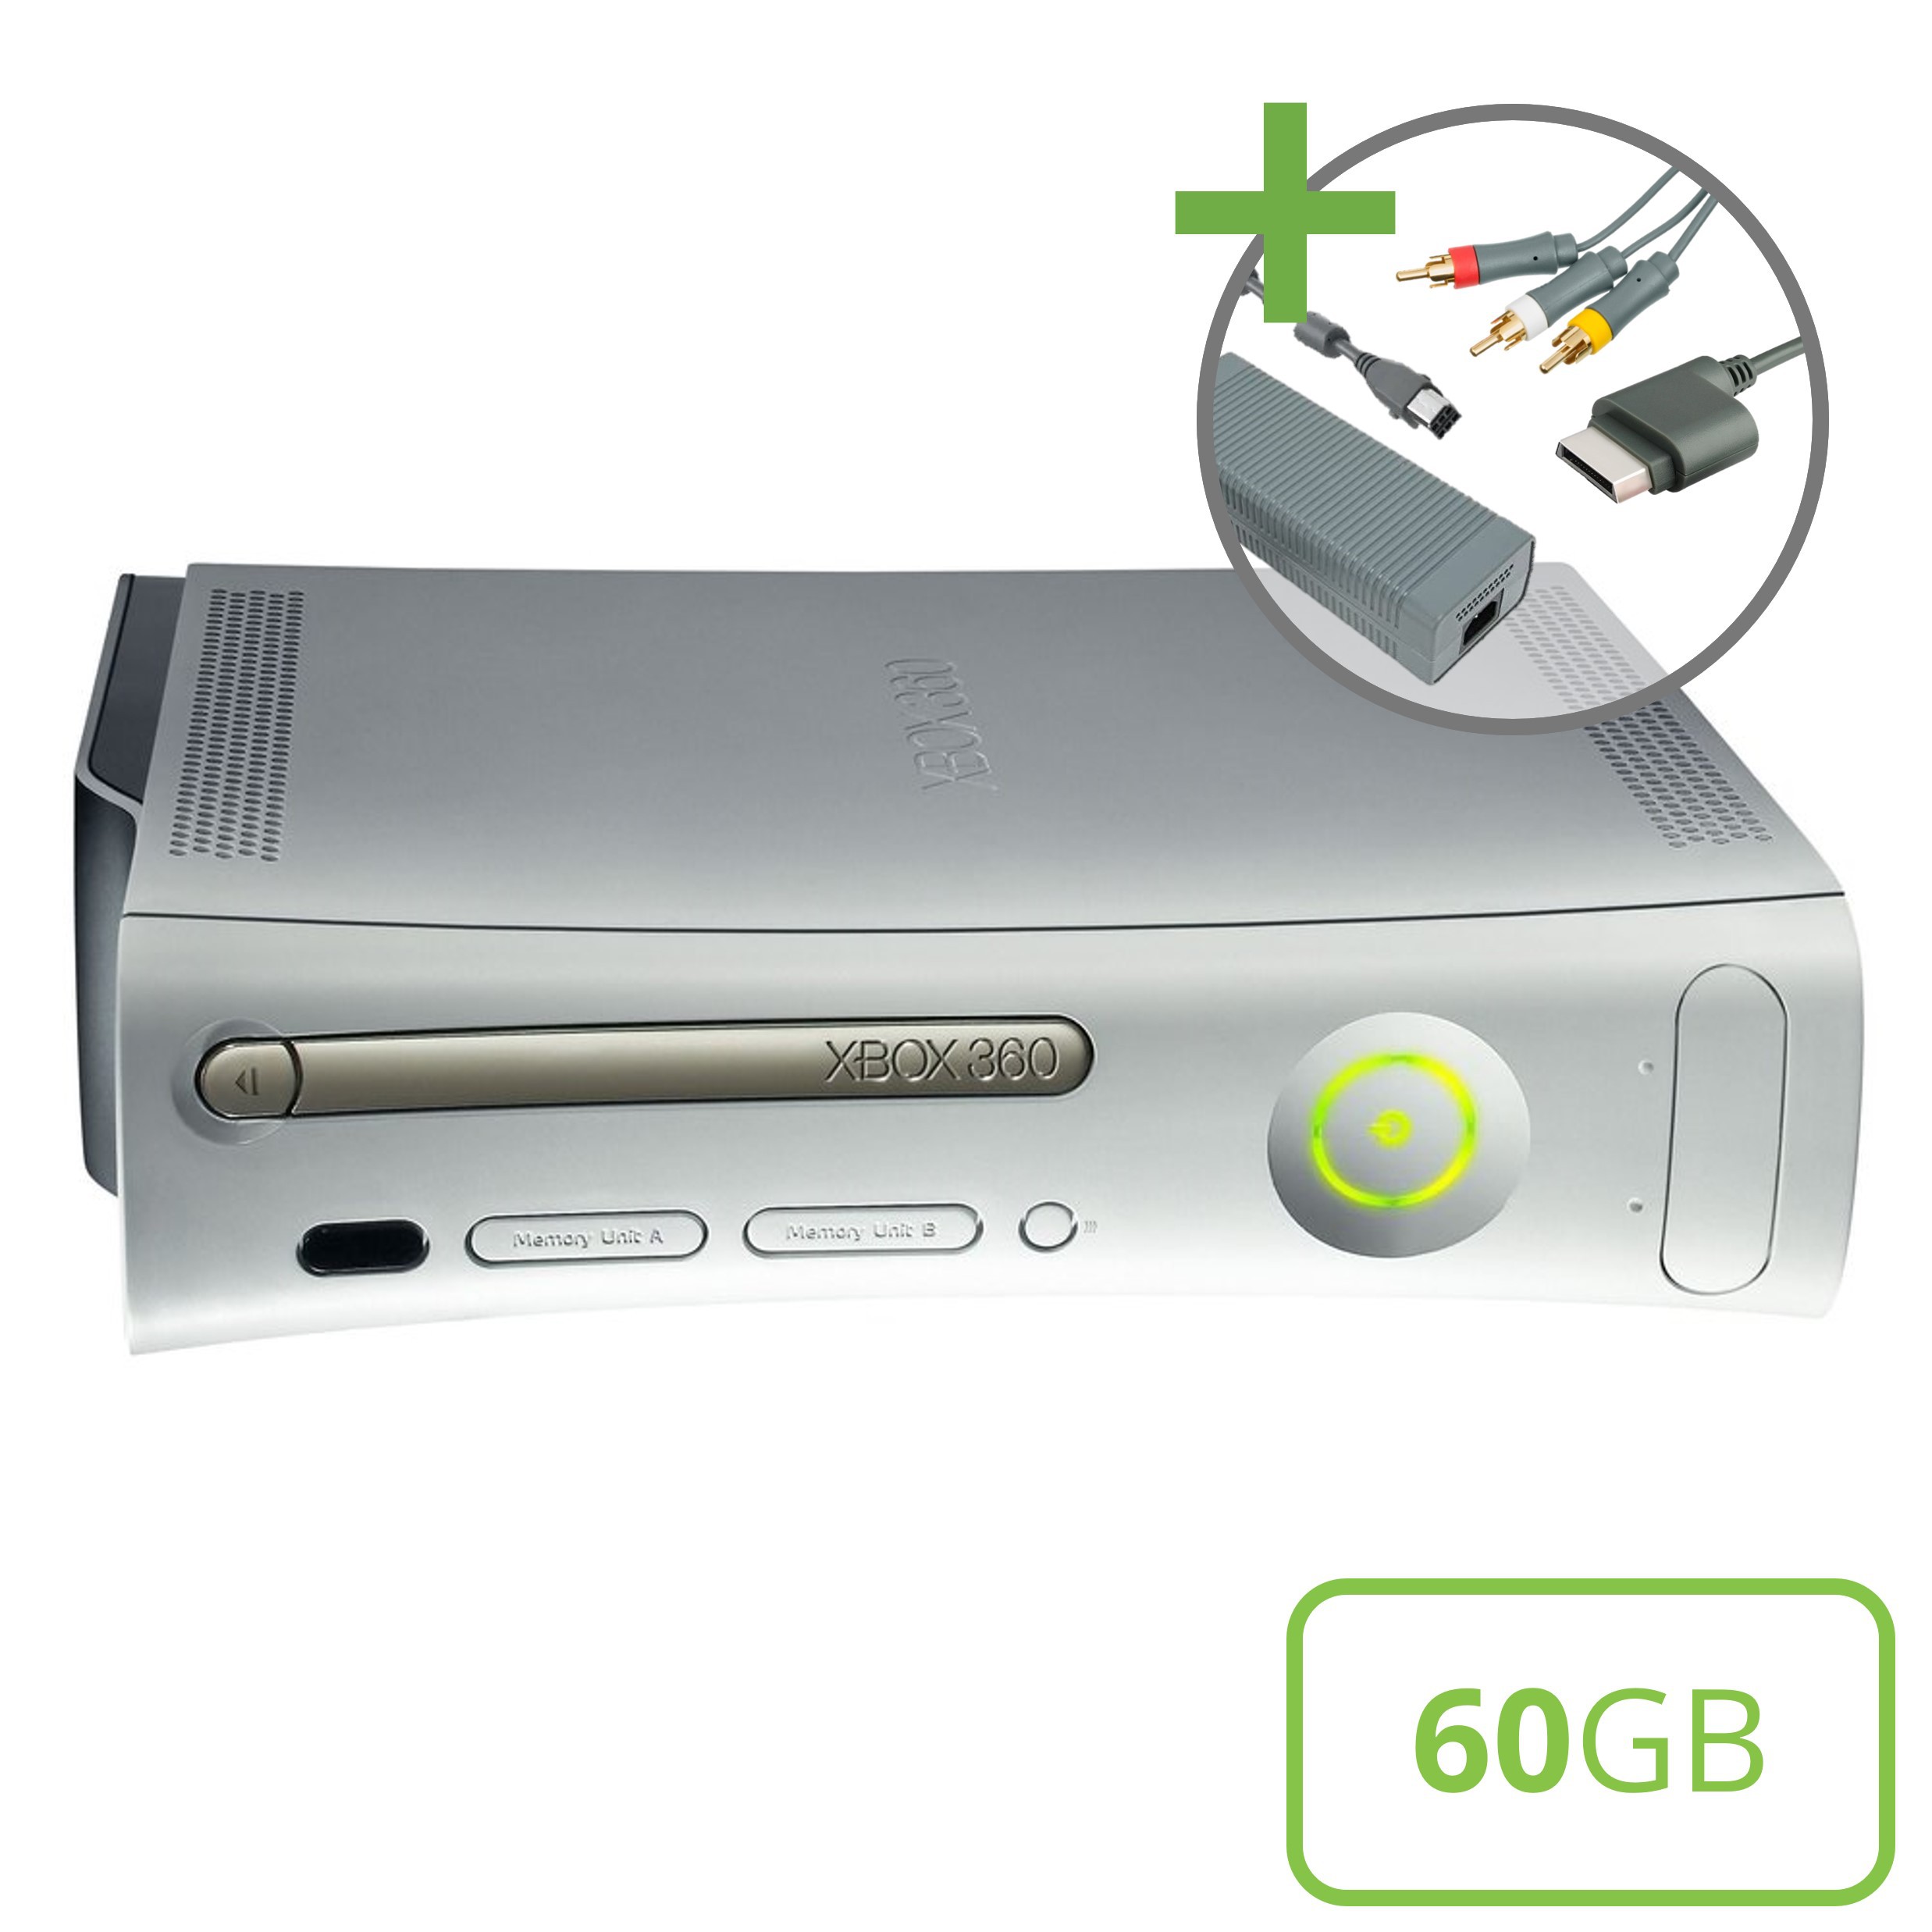 Microsoft Xbox 360 Premium Console (AV) - 60GB - Xbox 360 Hardware - 2